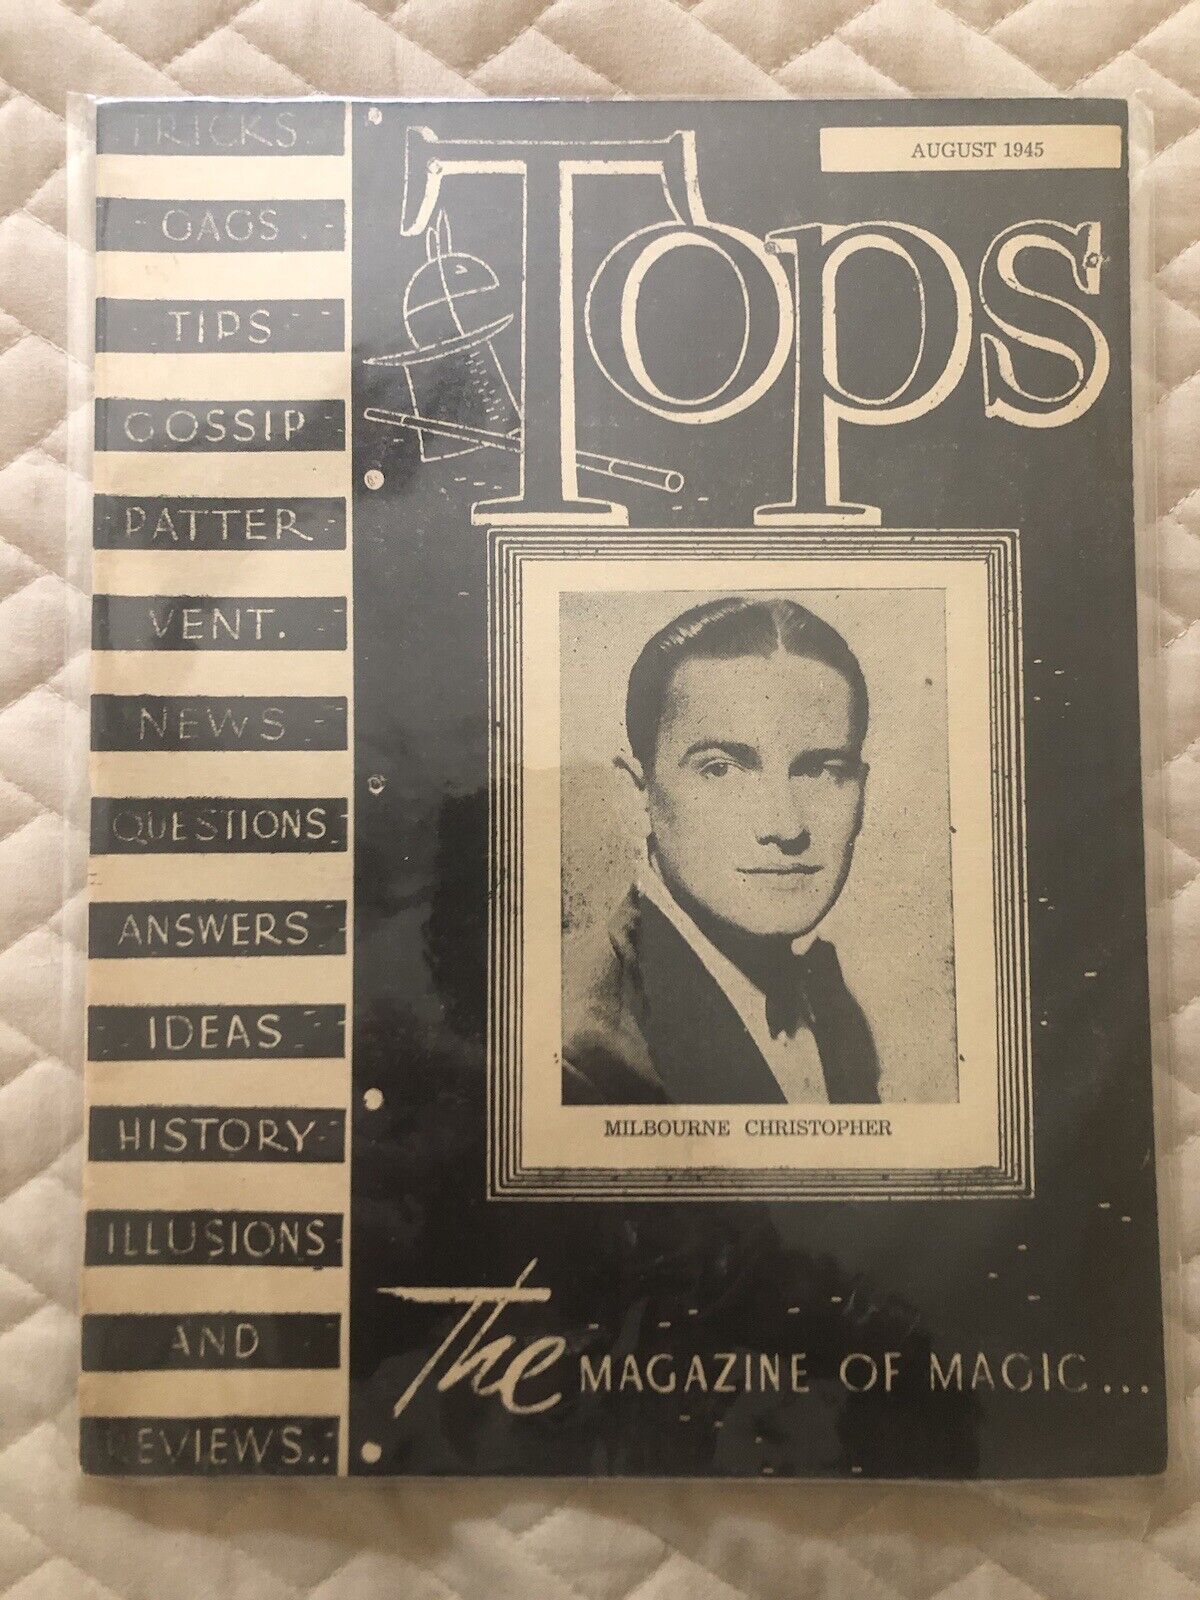 Abbott's Tops Magazine of Magic - Melbourne Christopher - Rare - August 1945